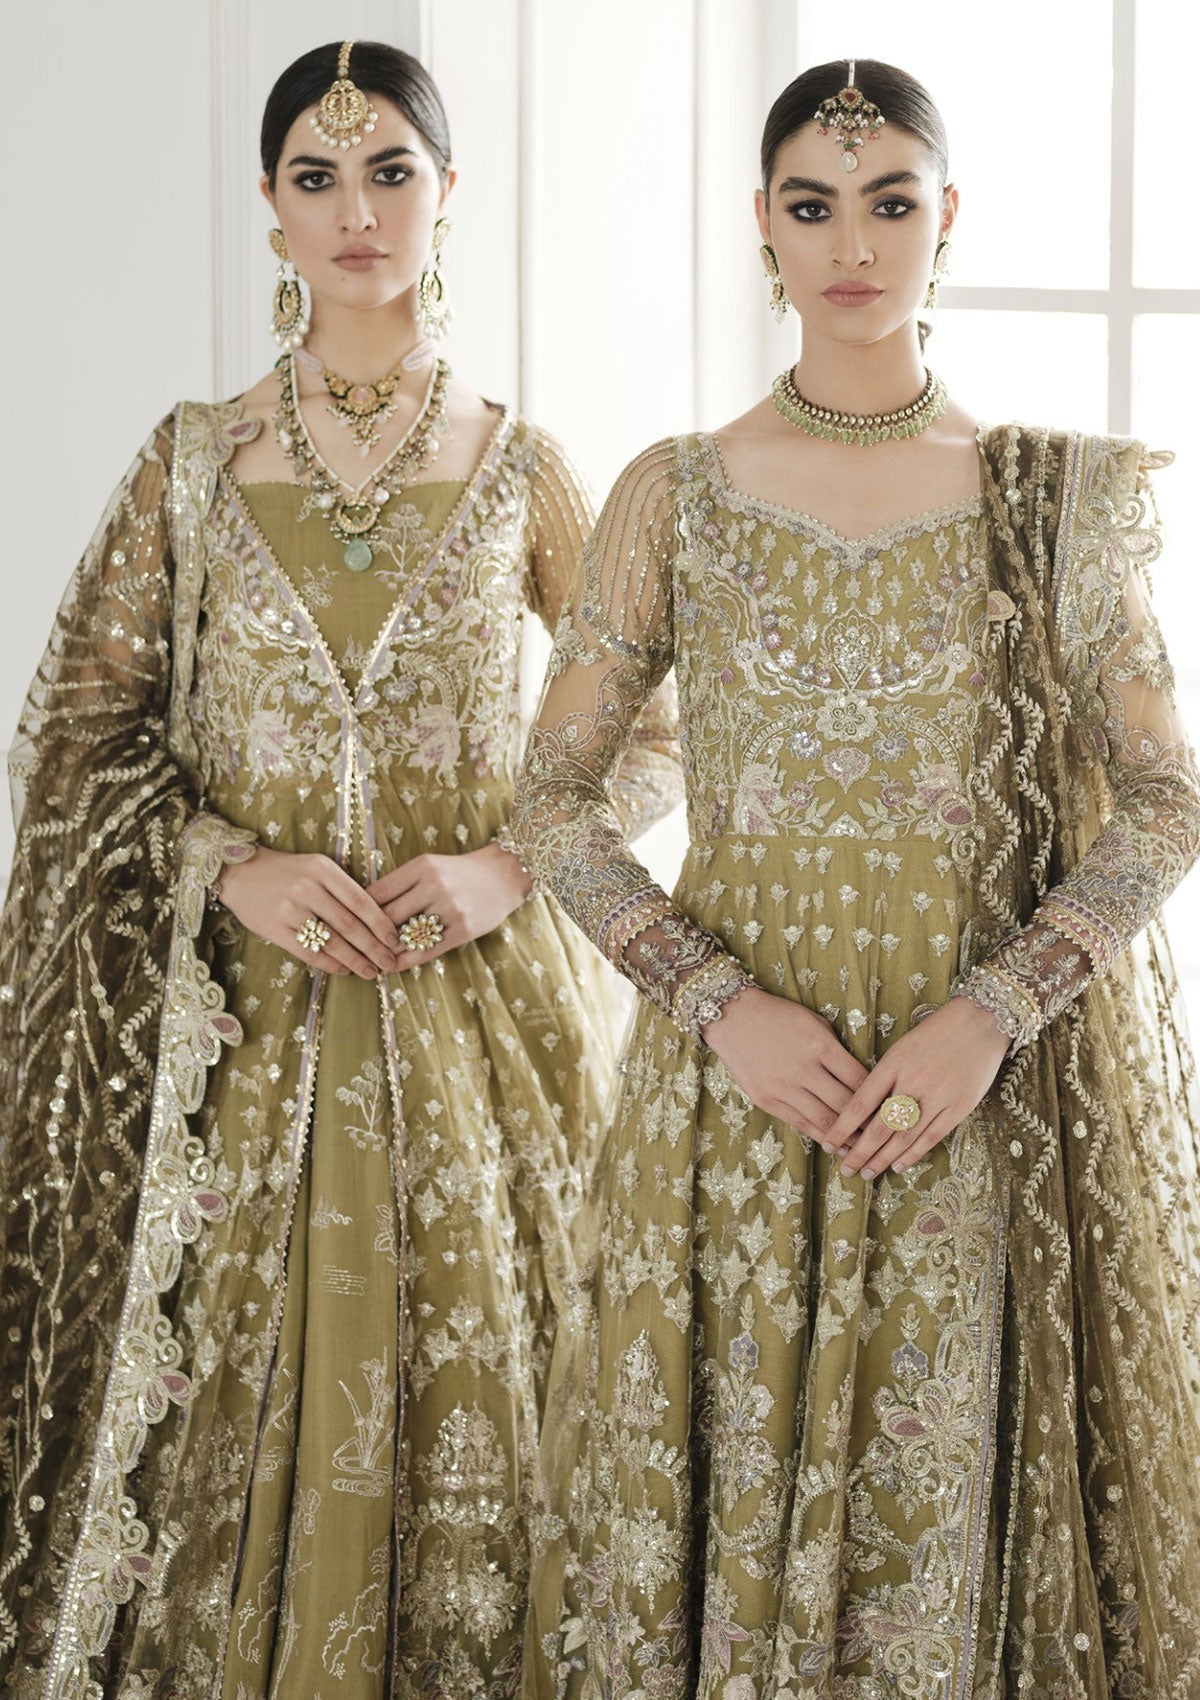 Formal Dress - Baroque - Chantelle - Festive - V10 - EC#02 available at Saleem Fabrics Traditions